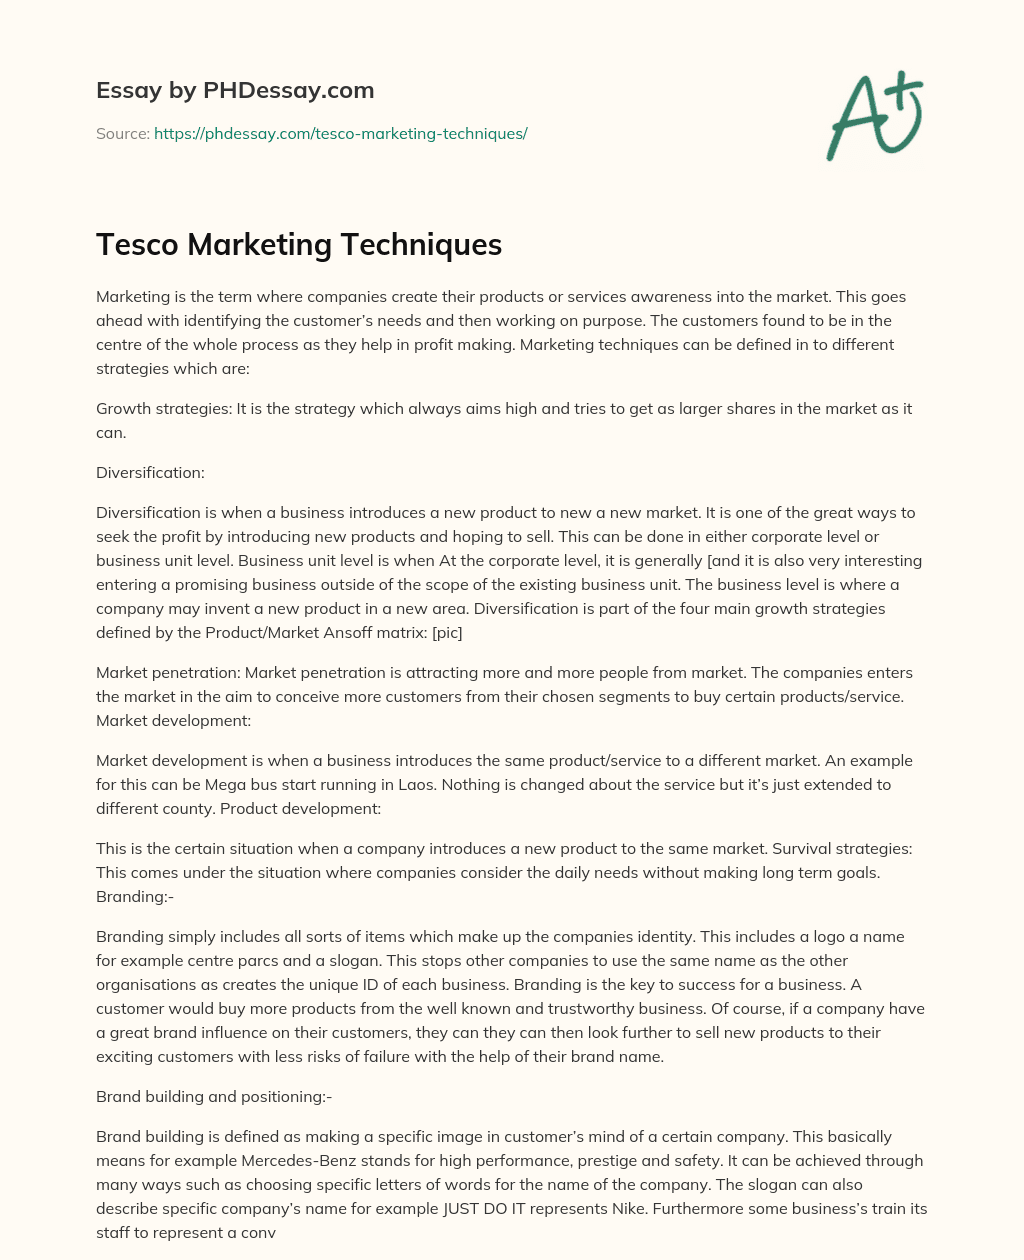 Tesco Marketing Techniques essay